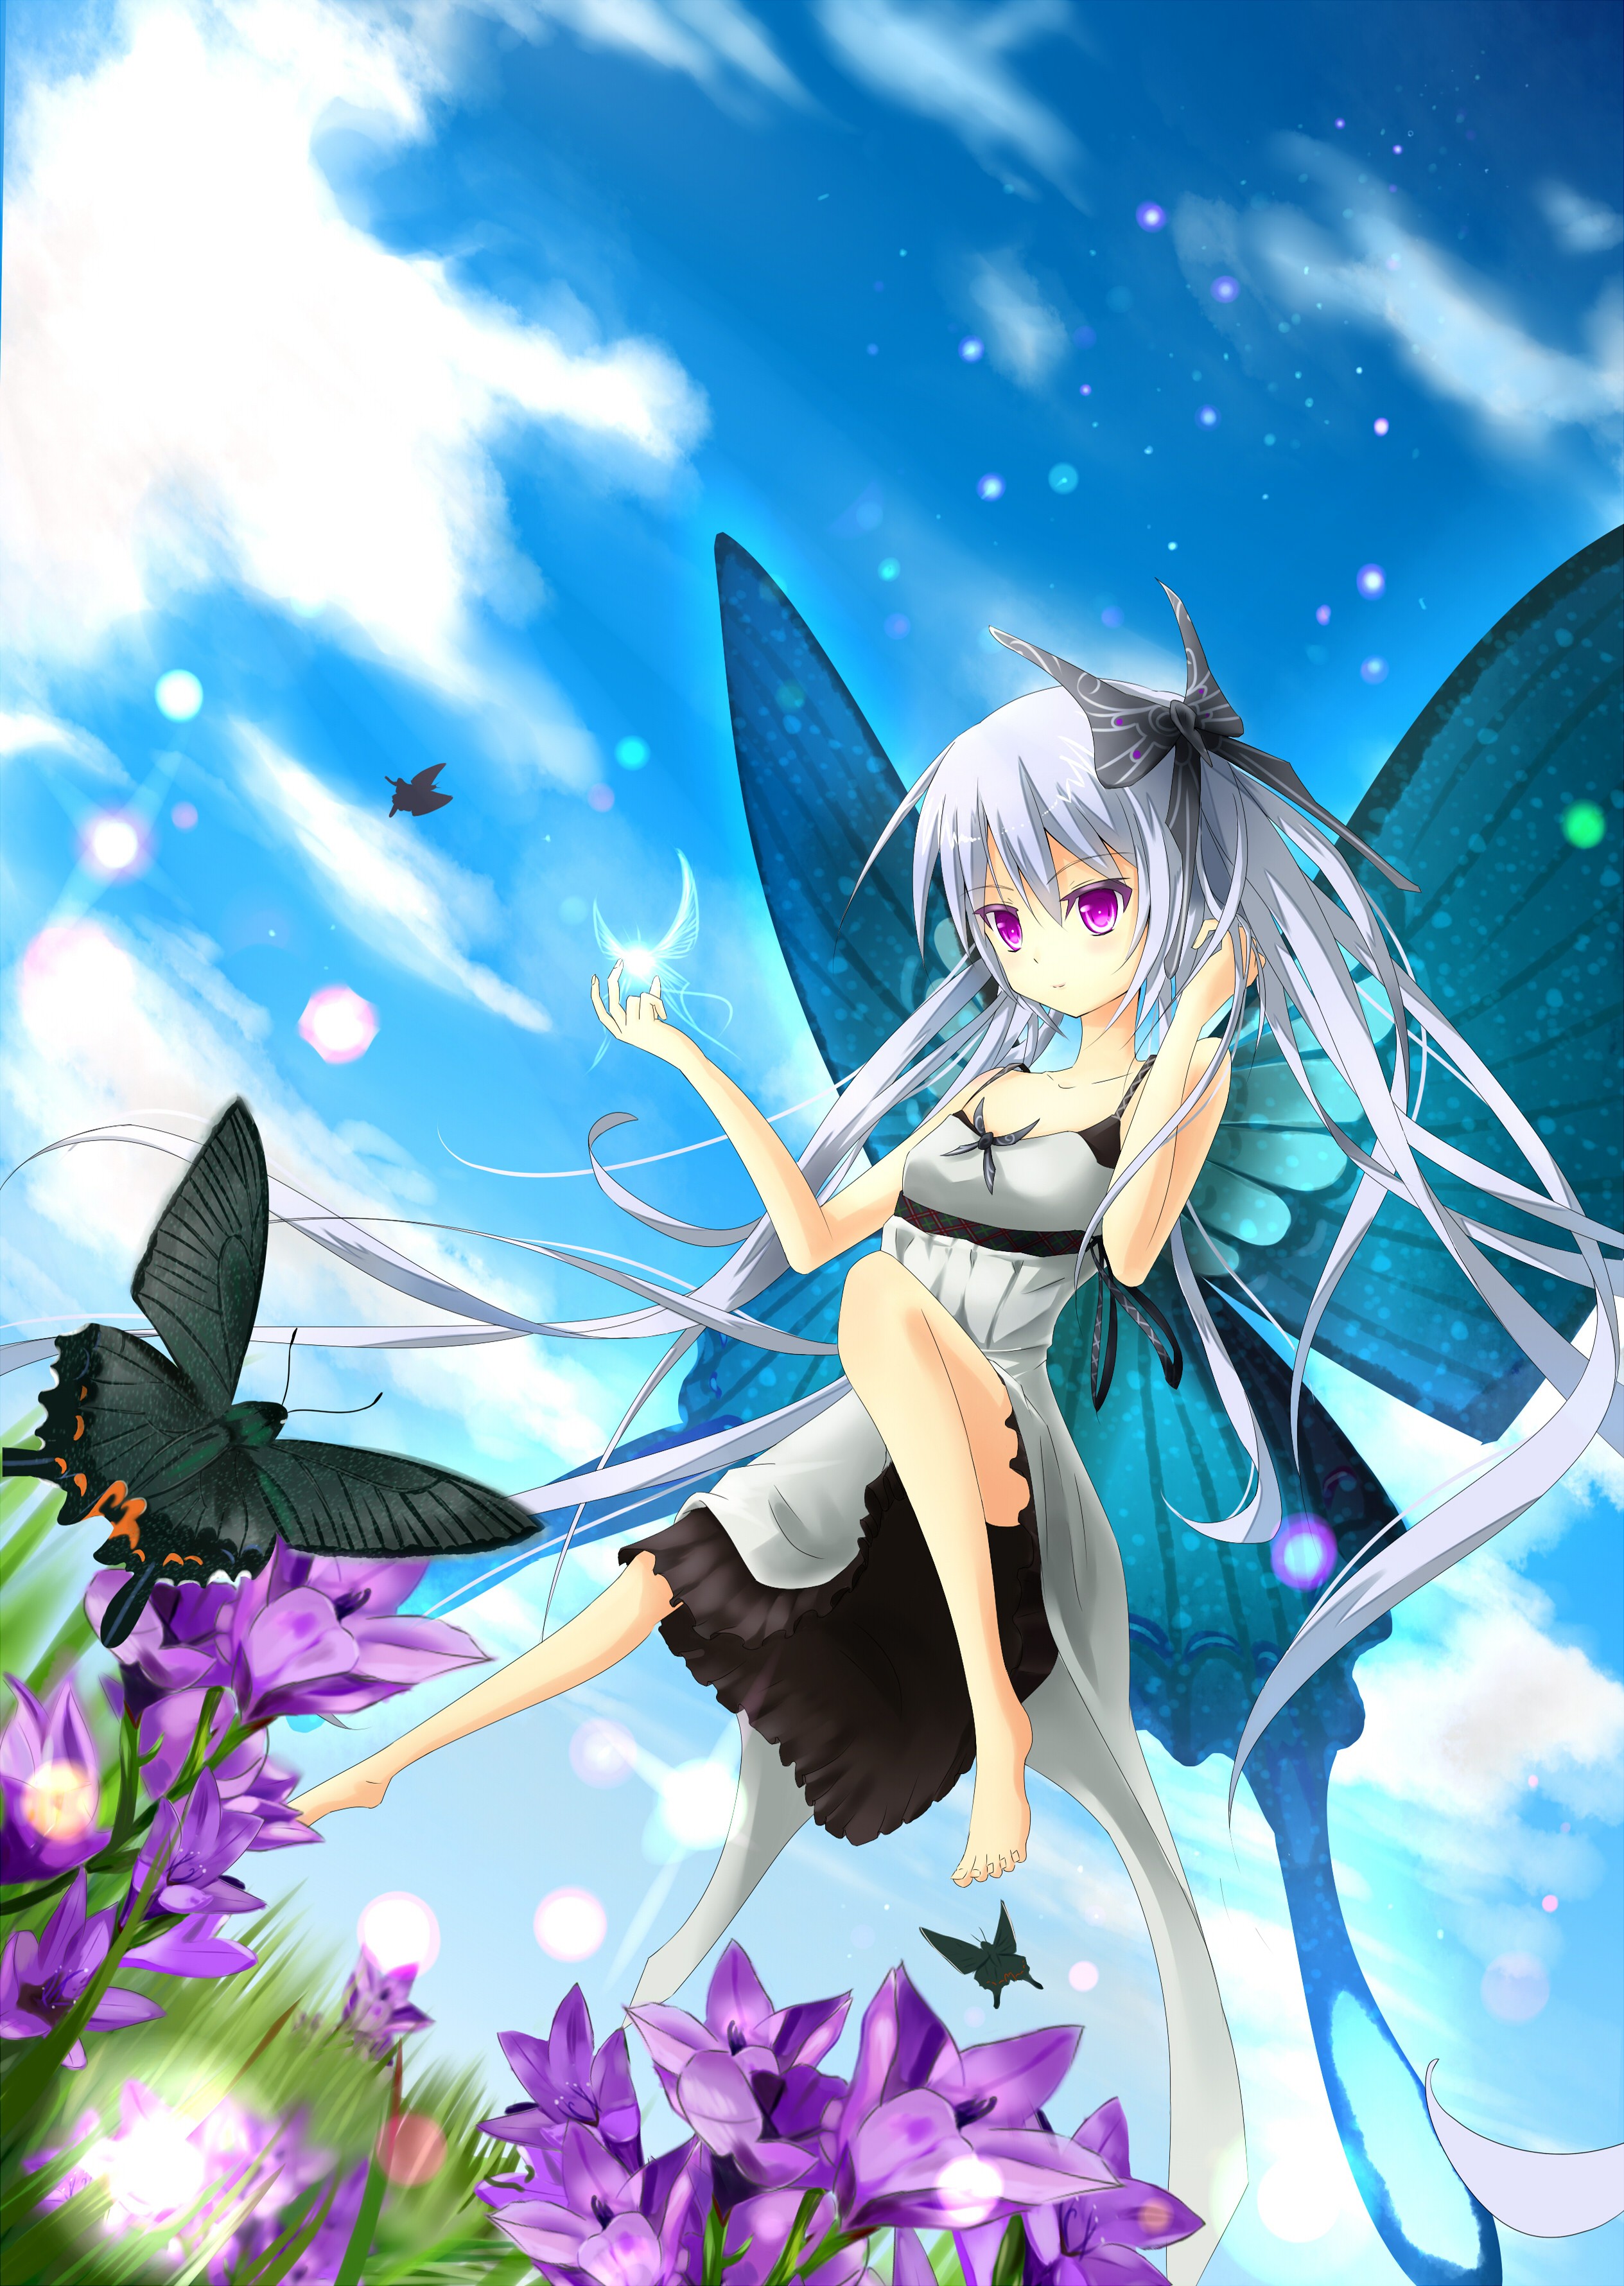 Anime 2529x3559 anime anime girls long hair wings sky clouds flowers butterfly barefoot Pixiv fantasy art fantasy girl